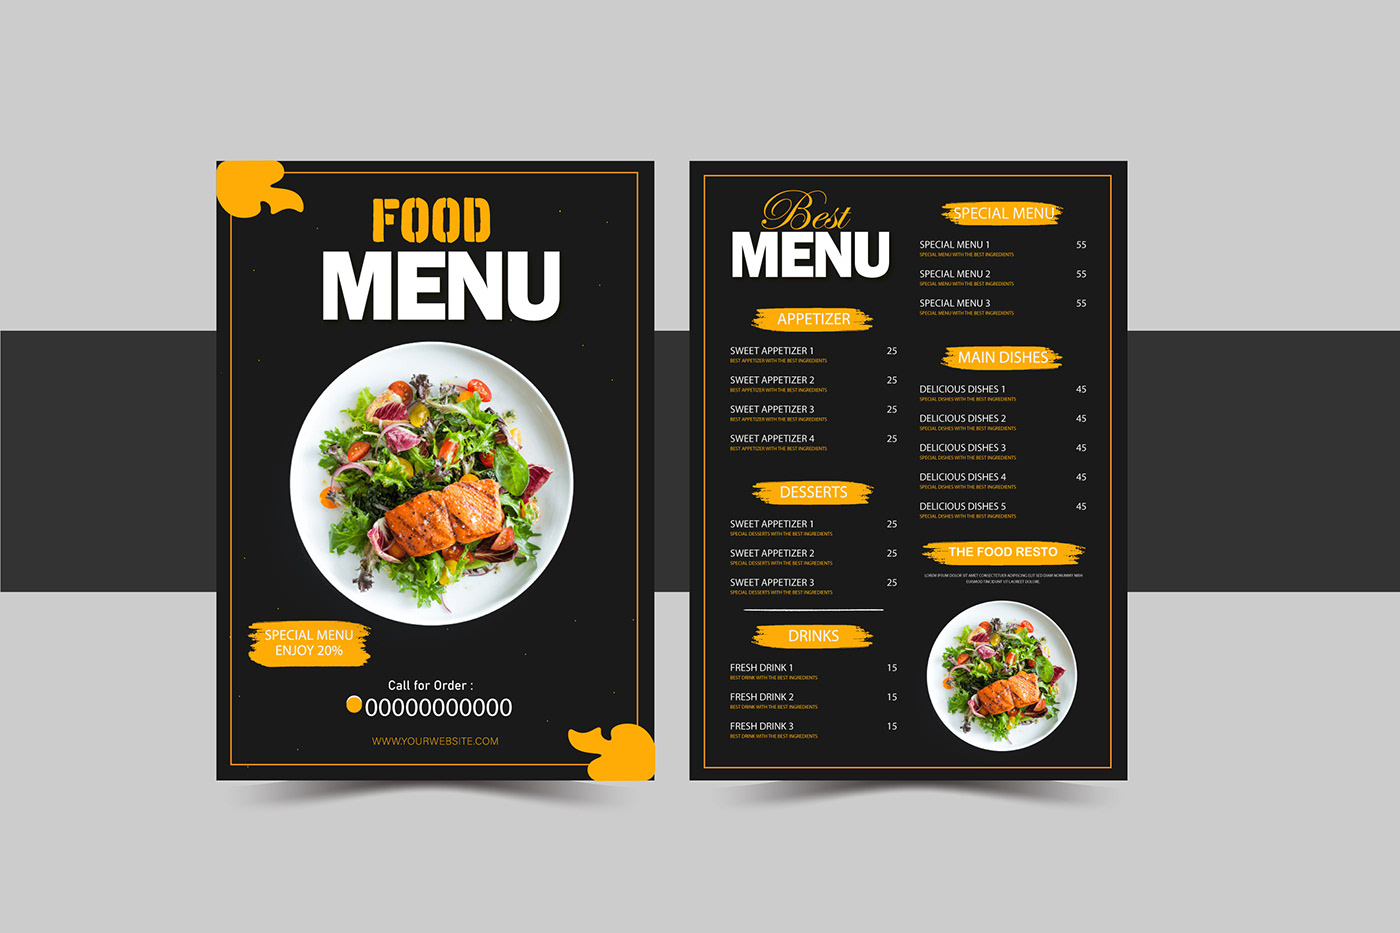 Main Menu food menu restaurant Advertising  mune design hamburger restaurant illustration retro food fast hot food